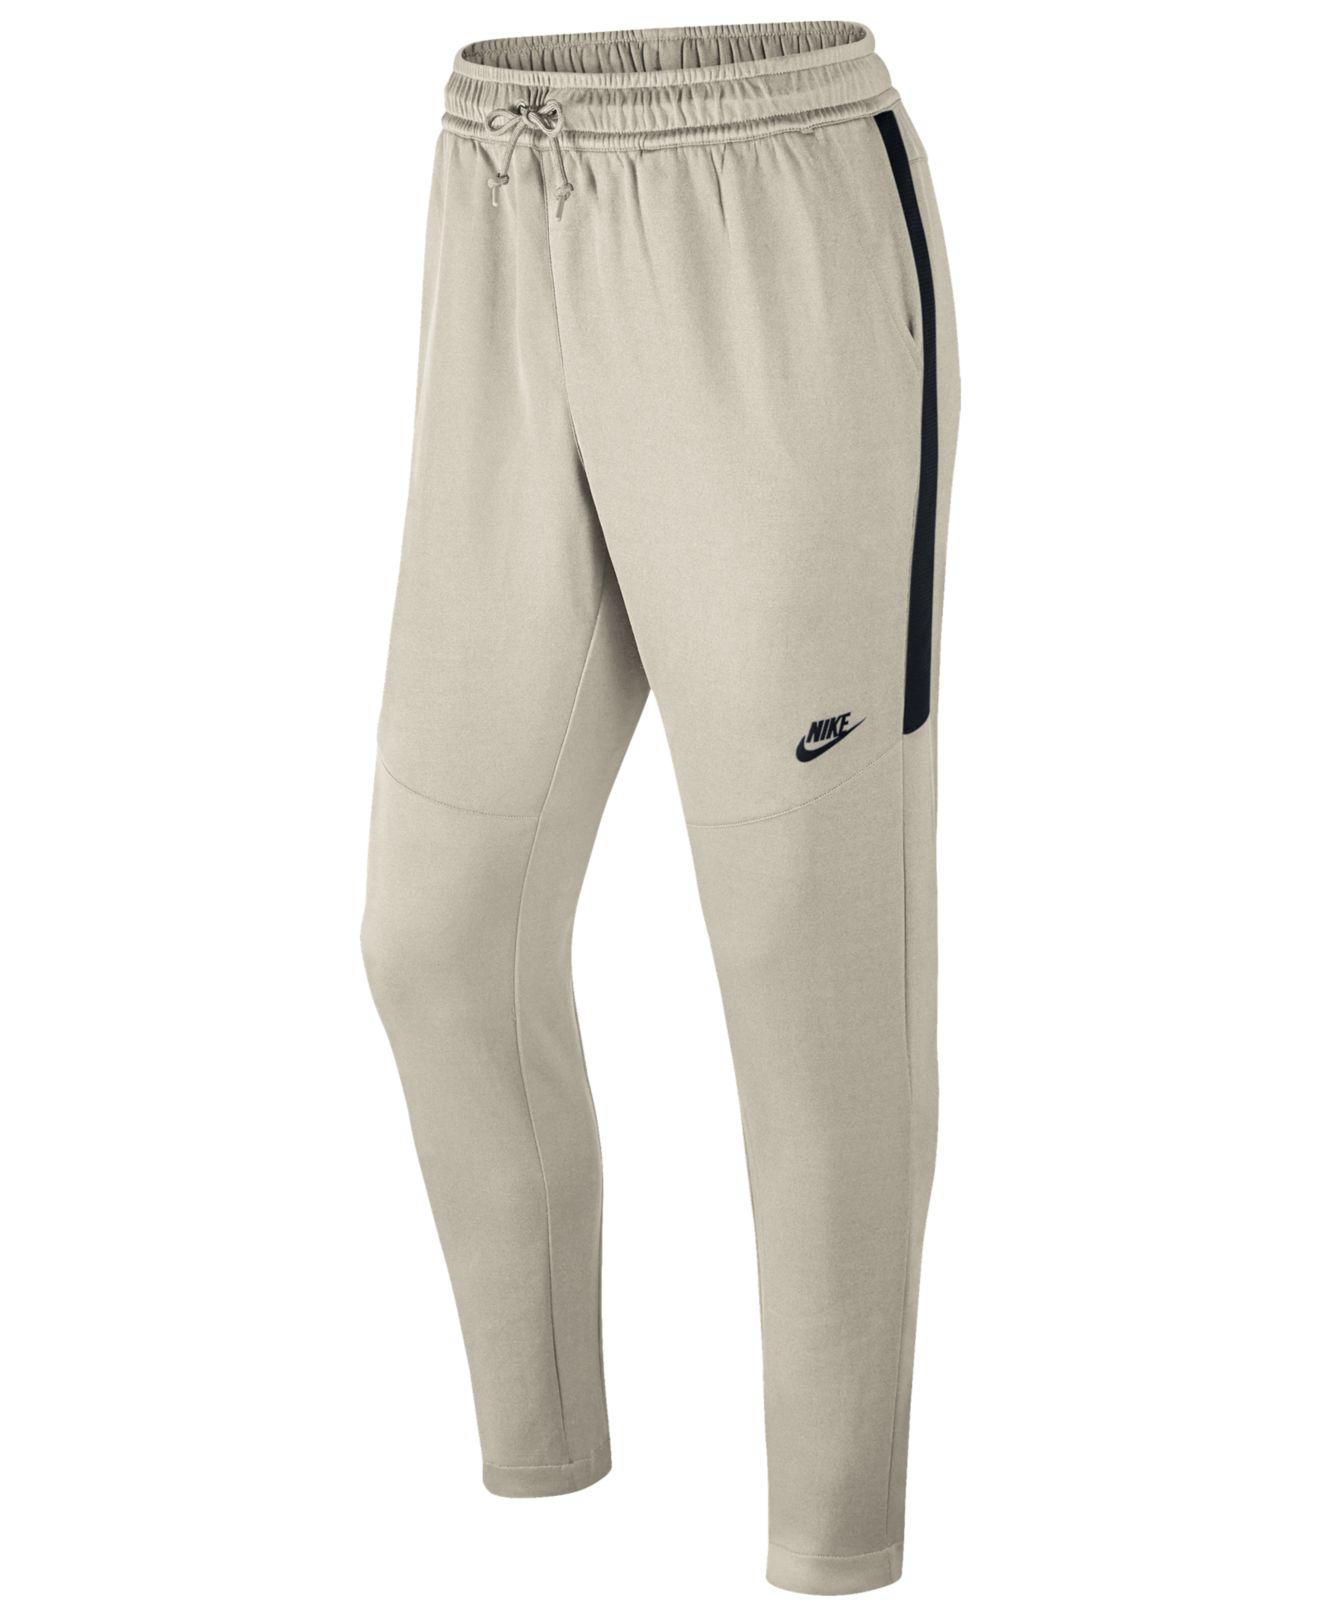 Nike Cotton Sportswear Tribute Pants in Light Bone (Natural) for Men - Lyst